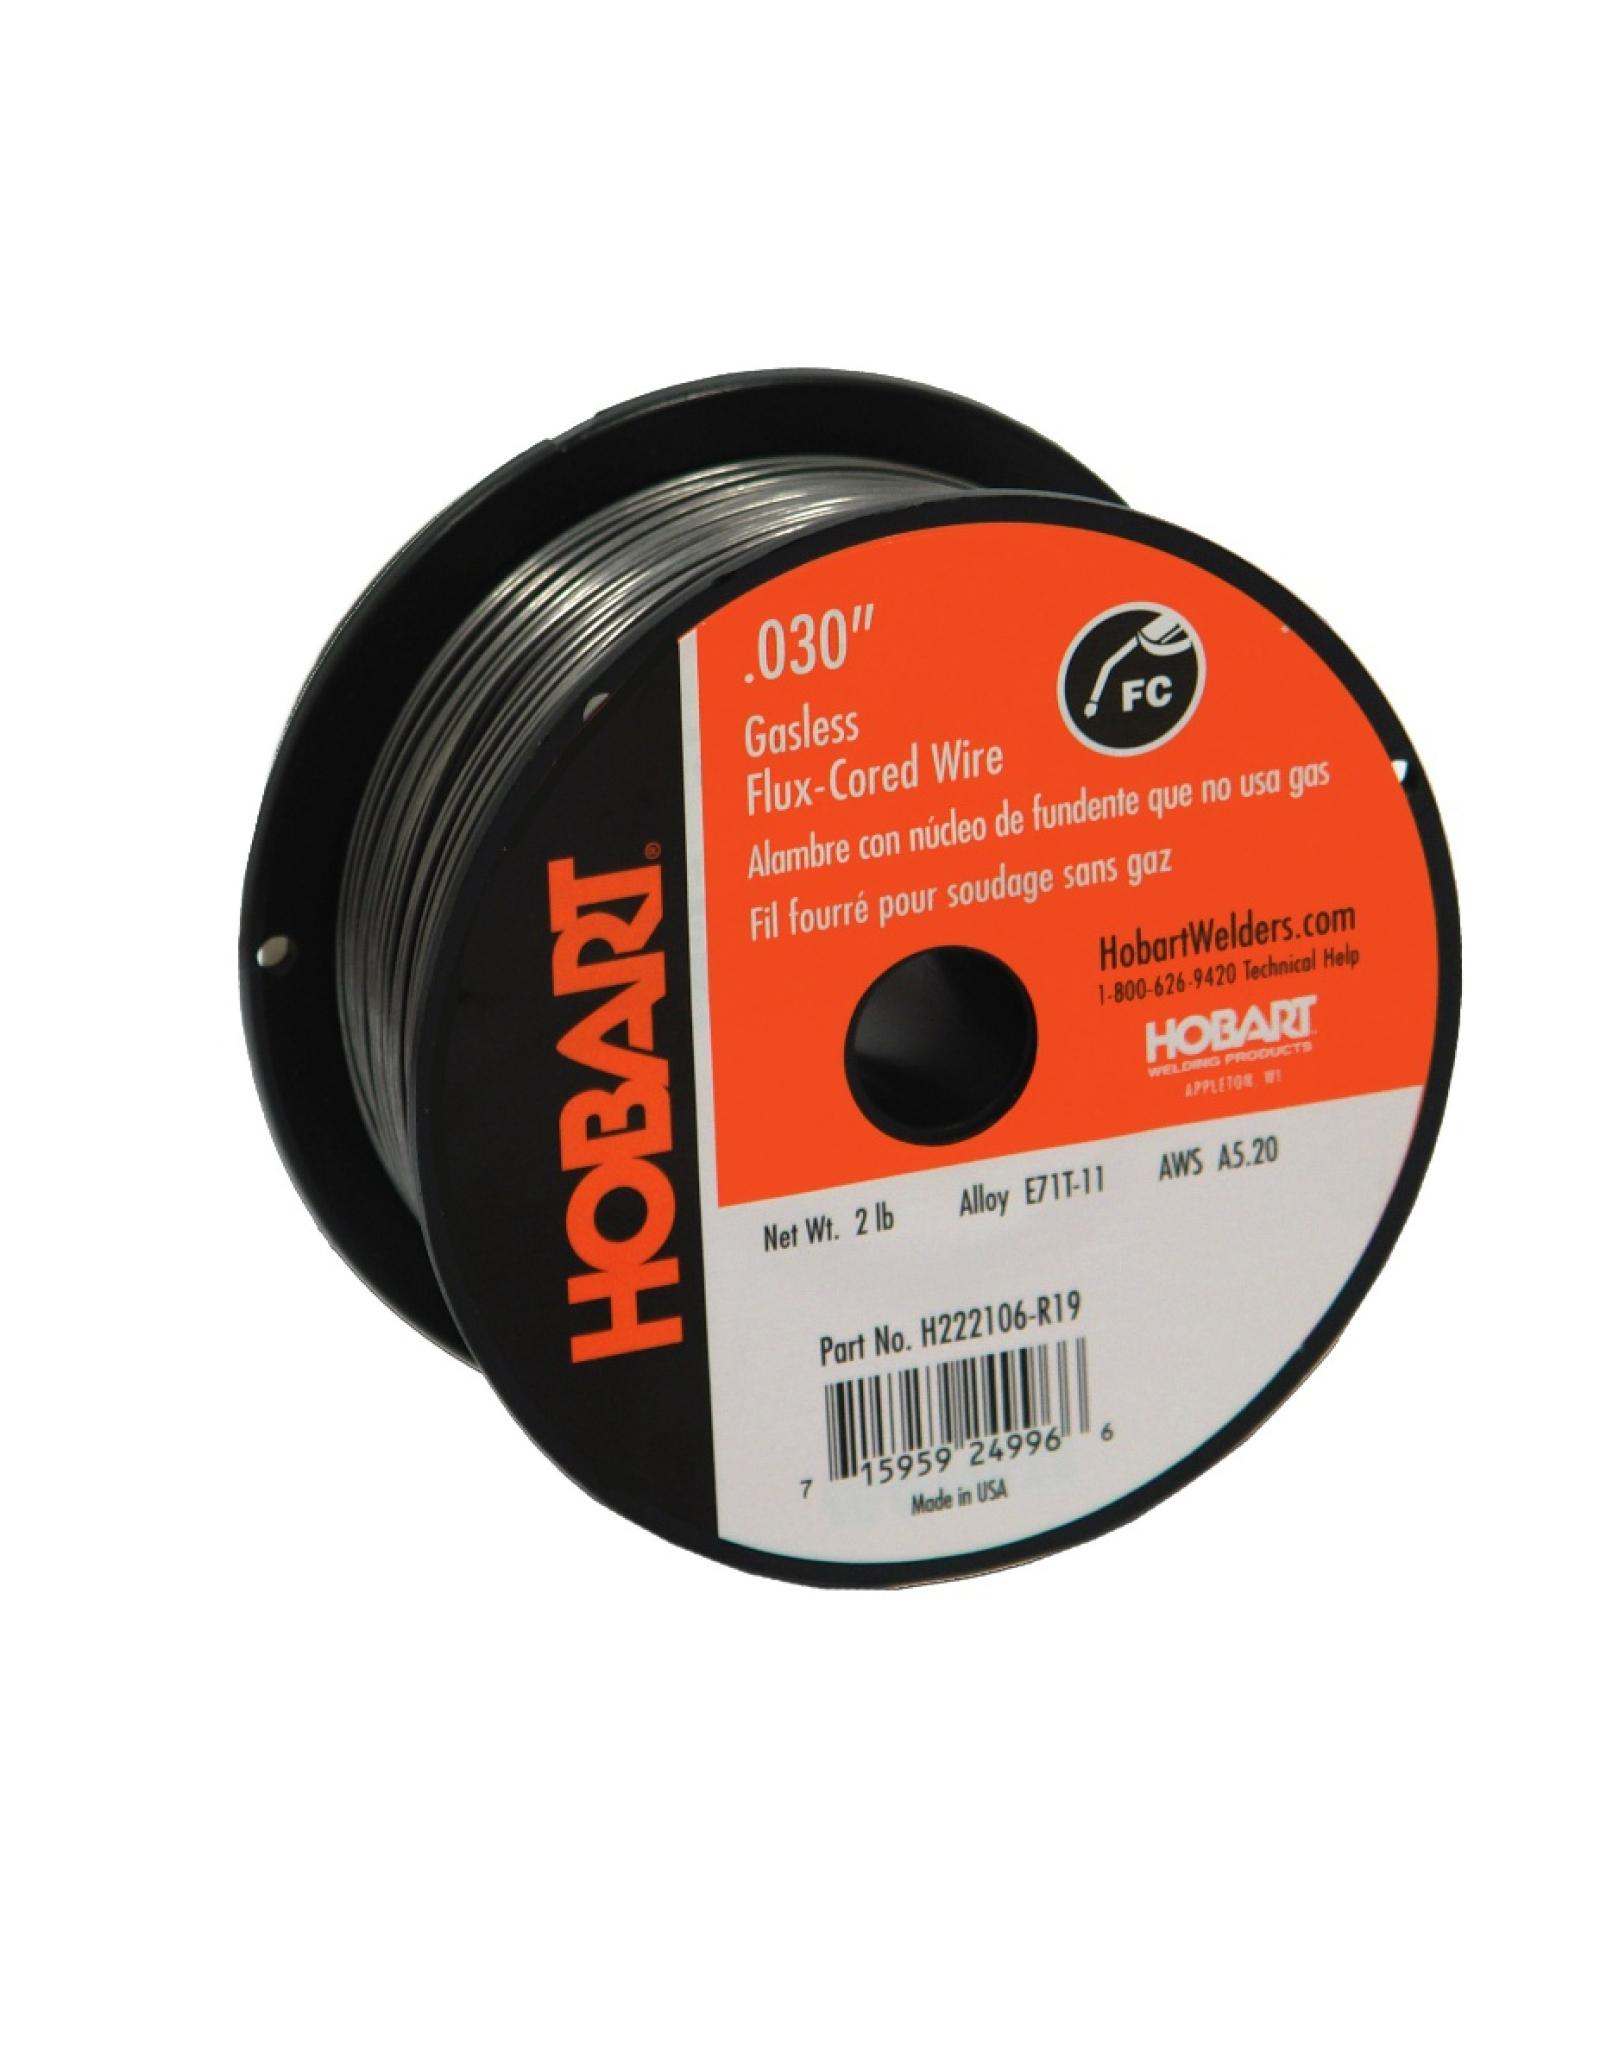 Hobart Flux-Cored Wire E71T-11 .030